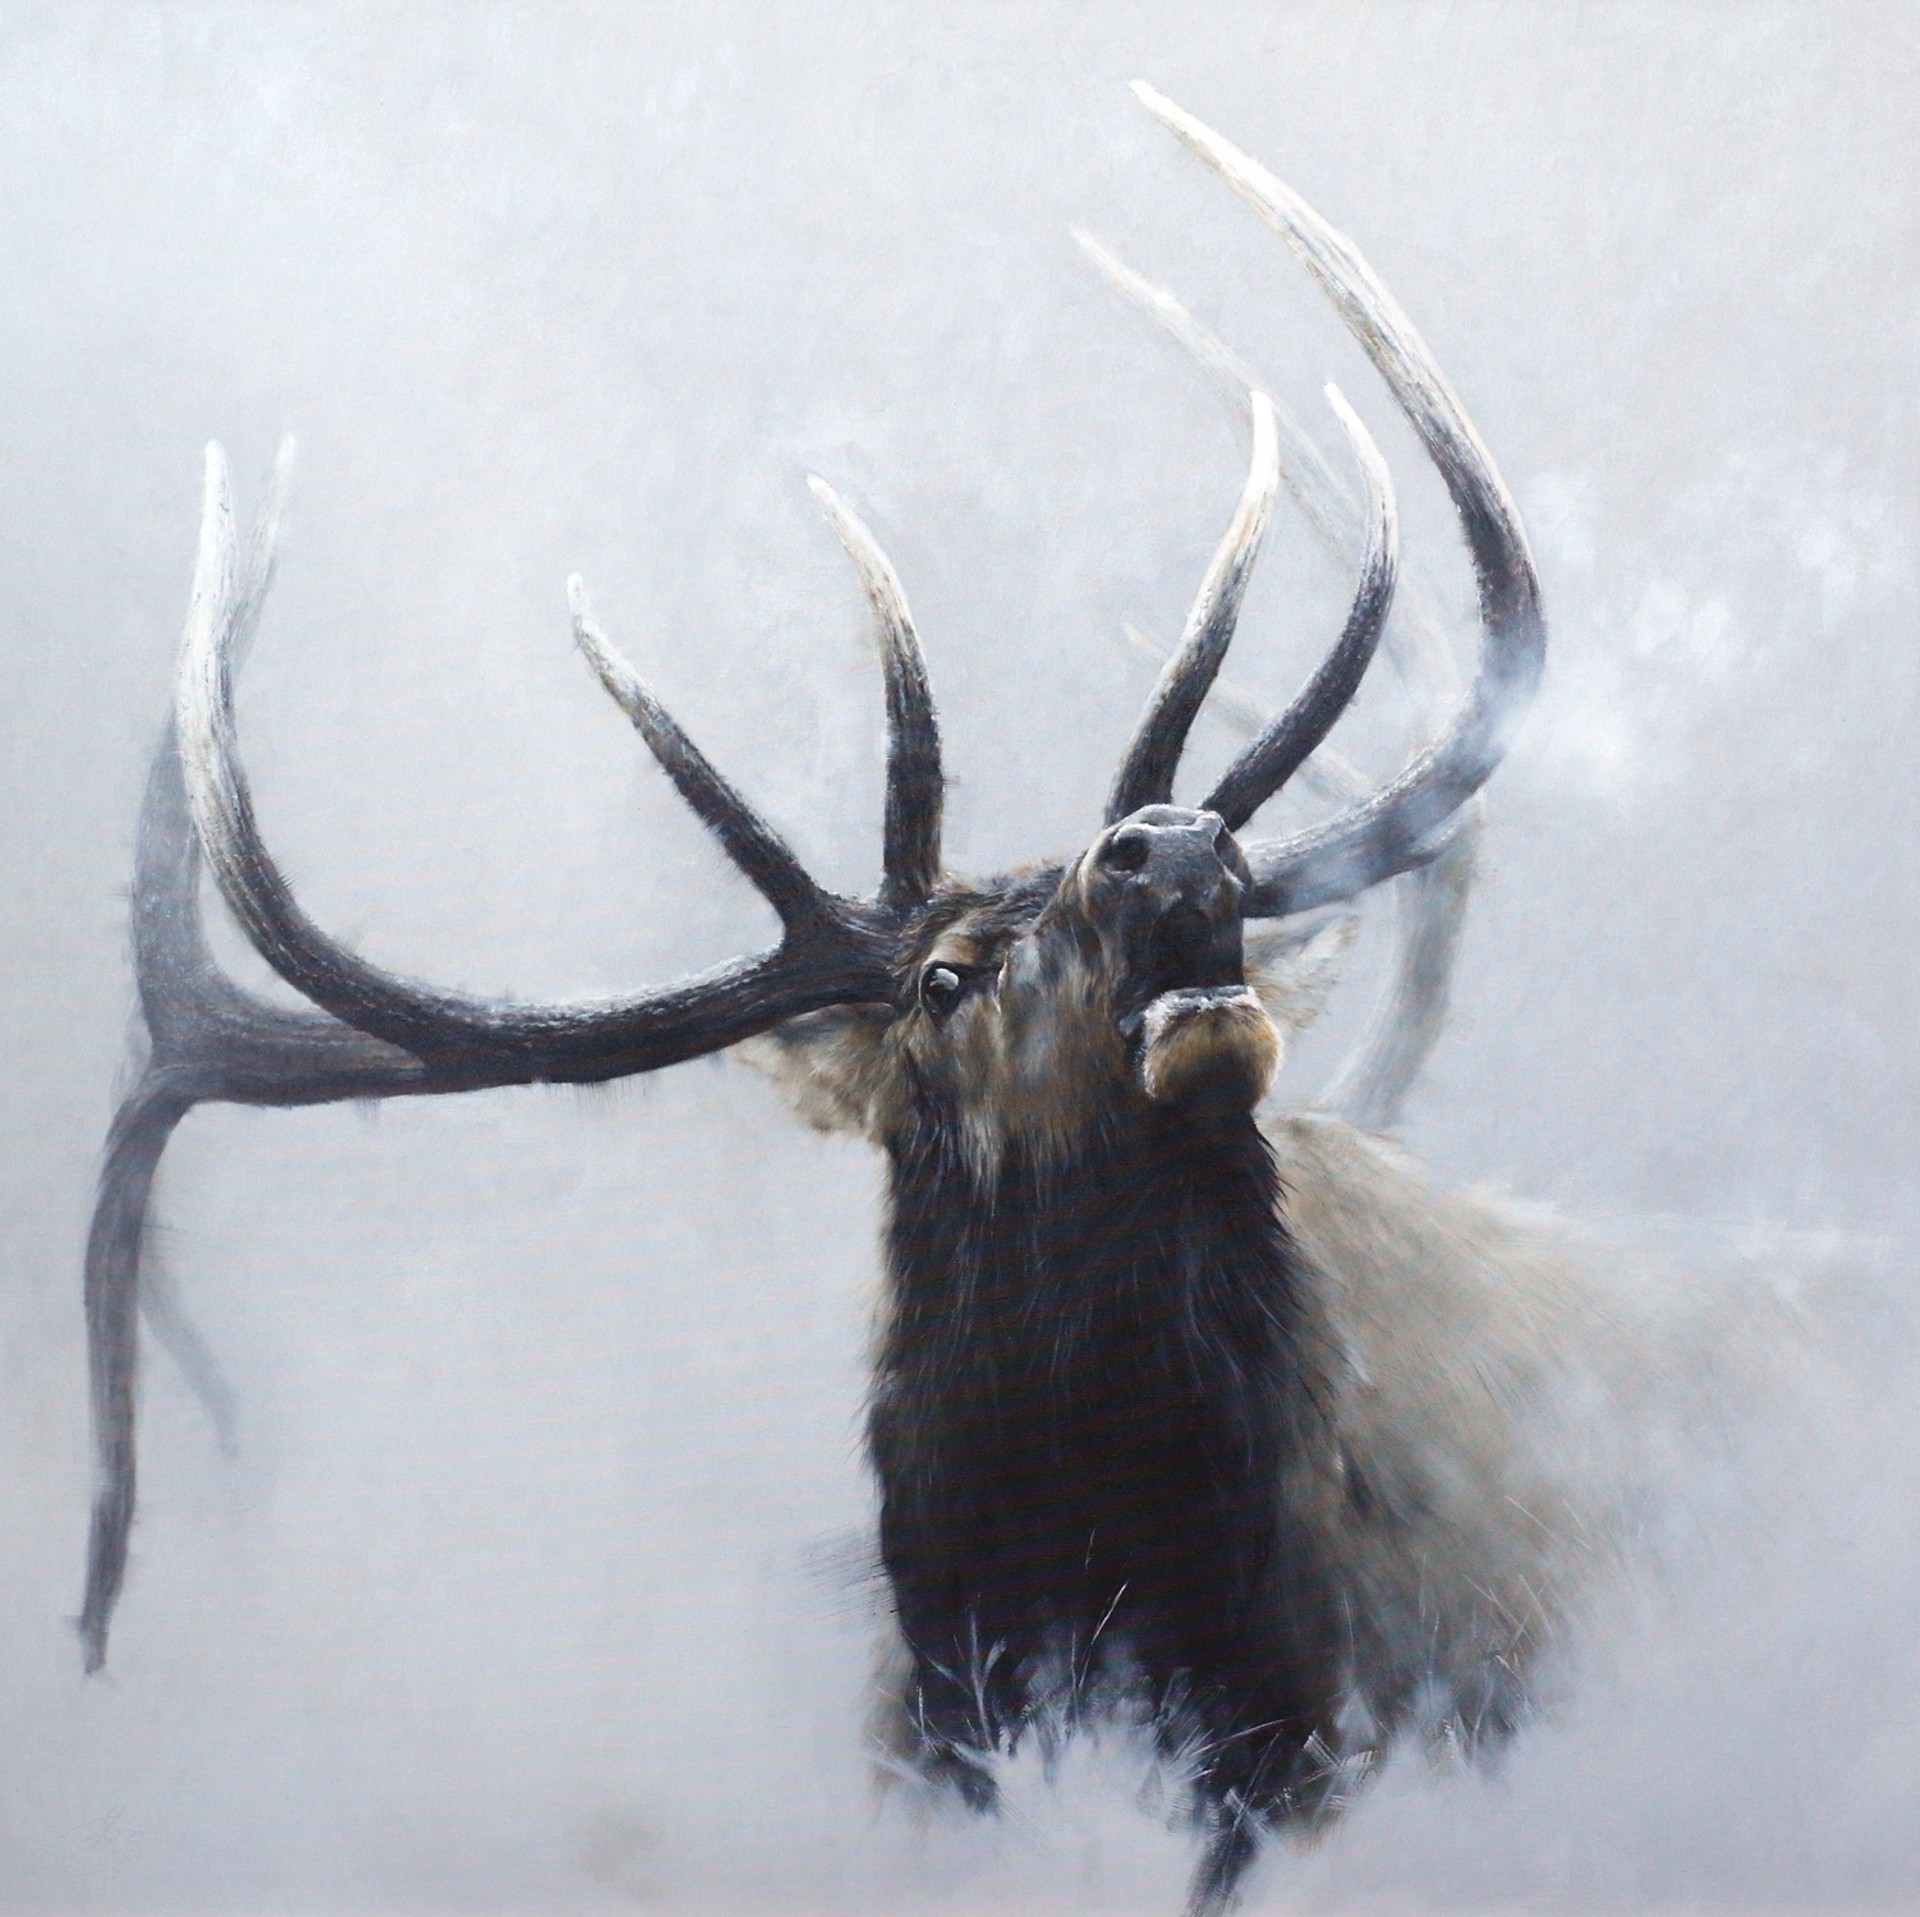 Elk Bugling Winter Landscape Breath Visible In The Air